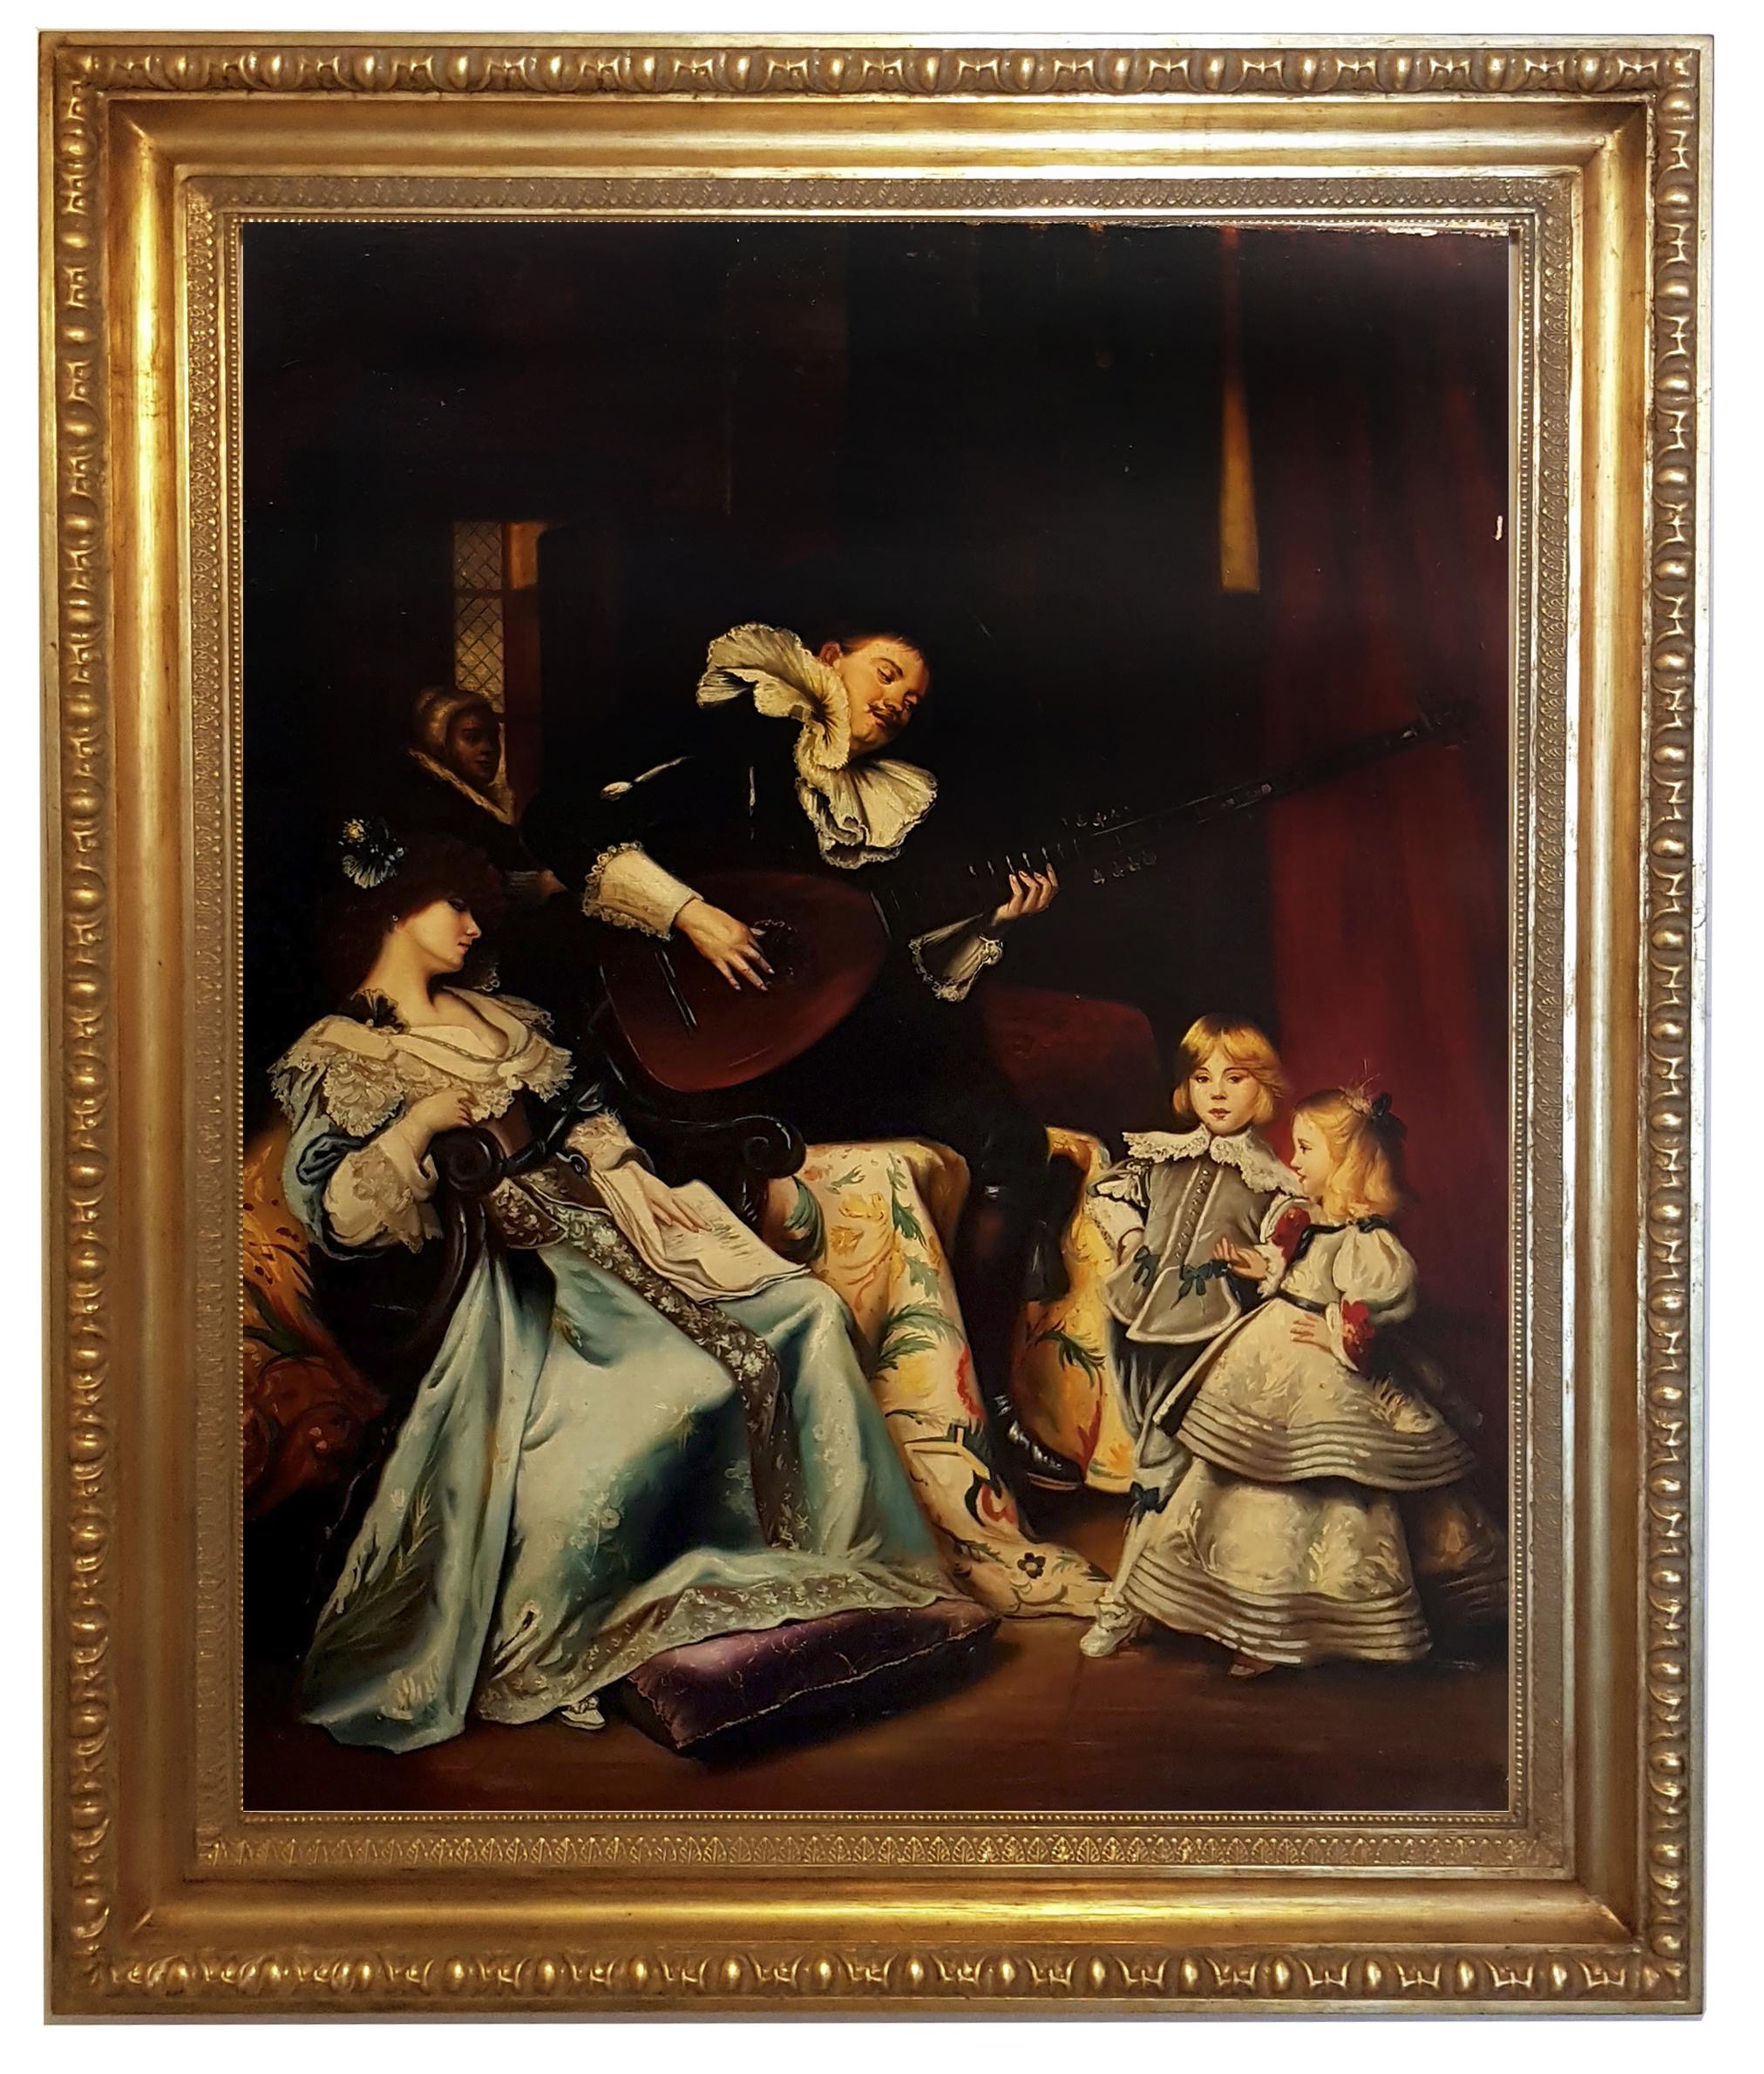 SCENE WITH MINSTREL- Eugenio De Blasi - Italy -Oil on canvas painting